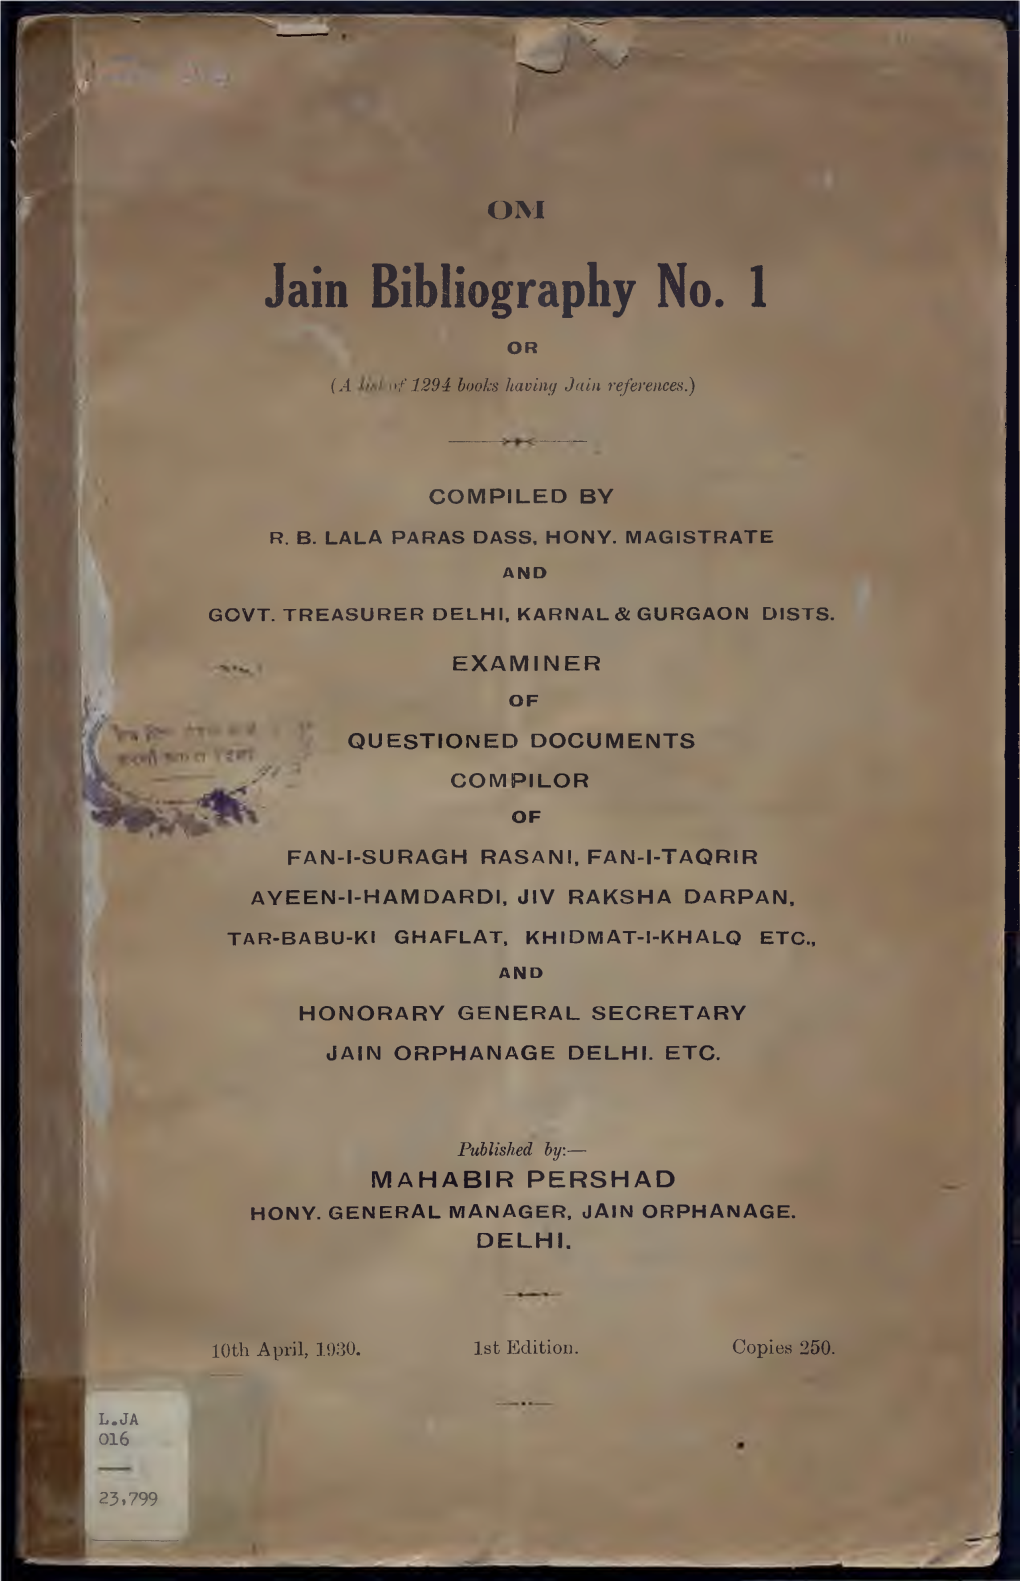 Jain Bibliography No. 1